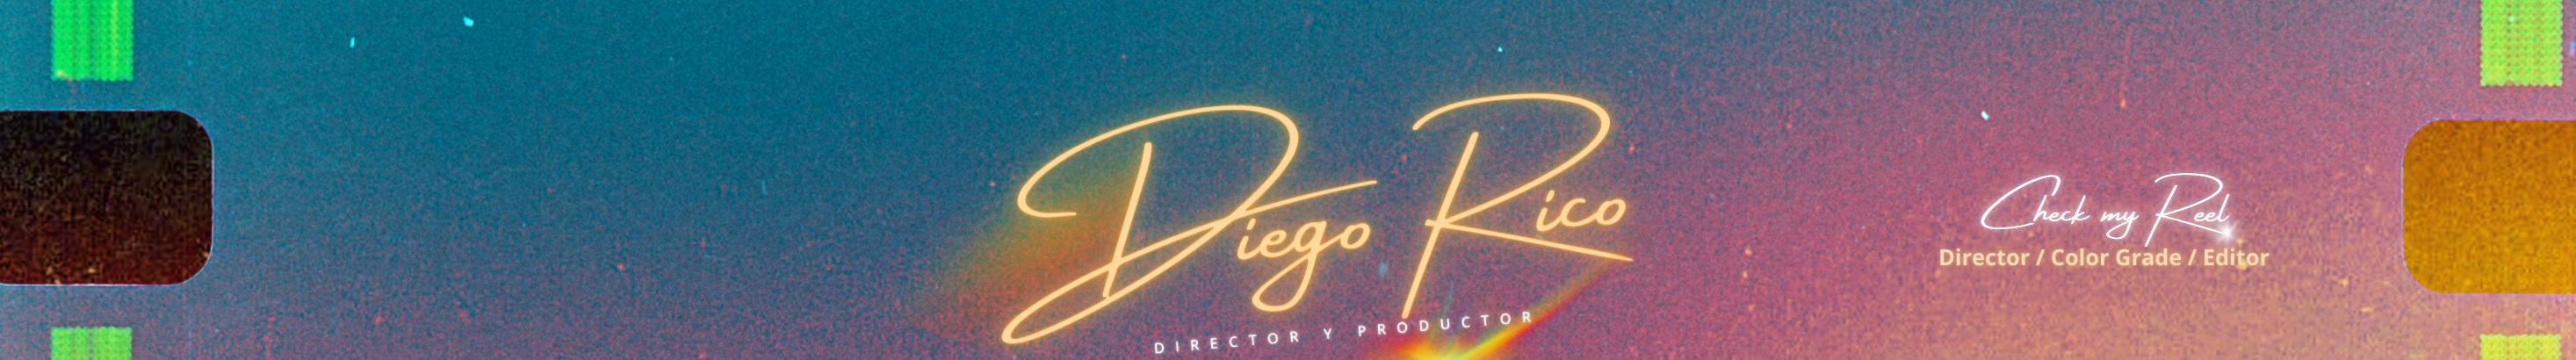 Diego Rico profil başlığı